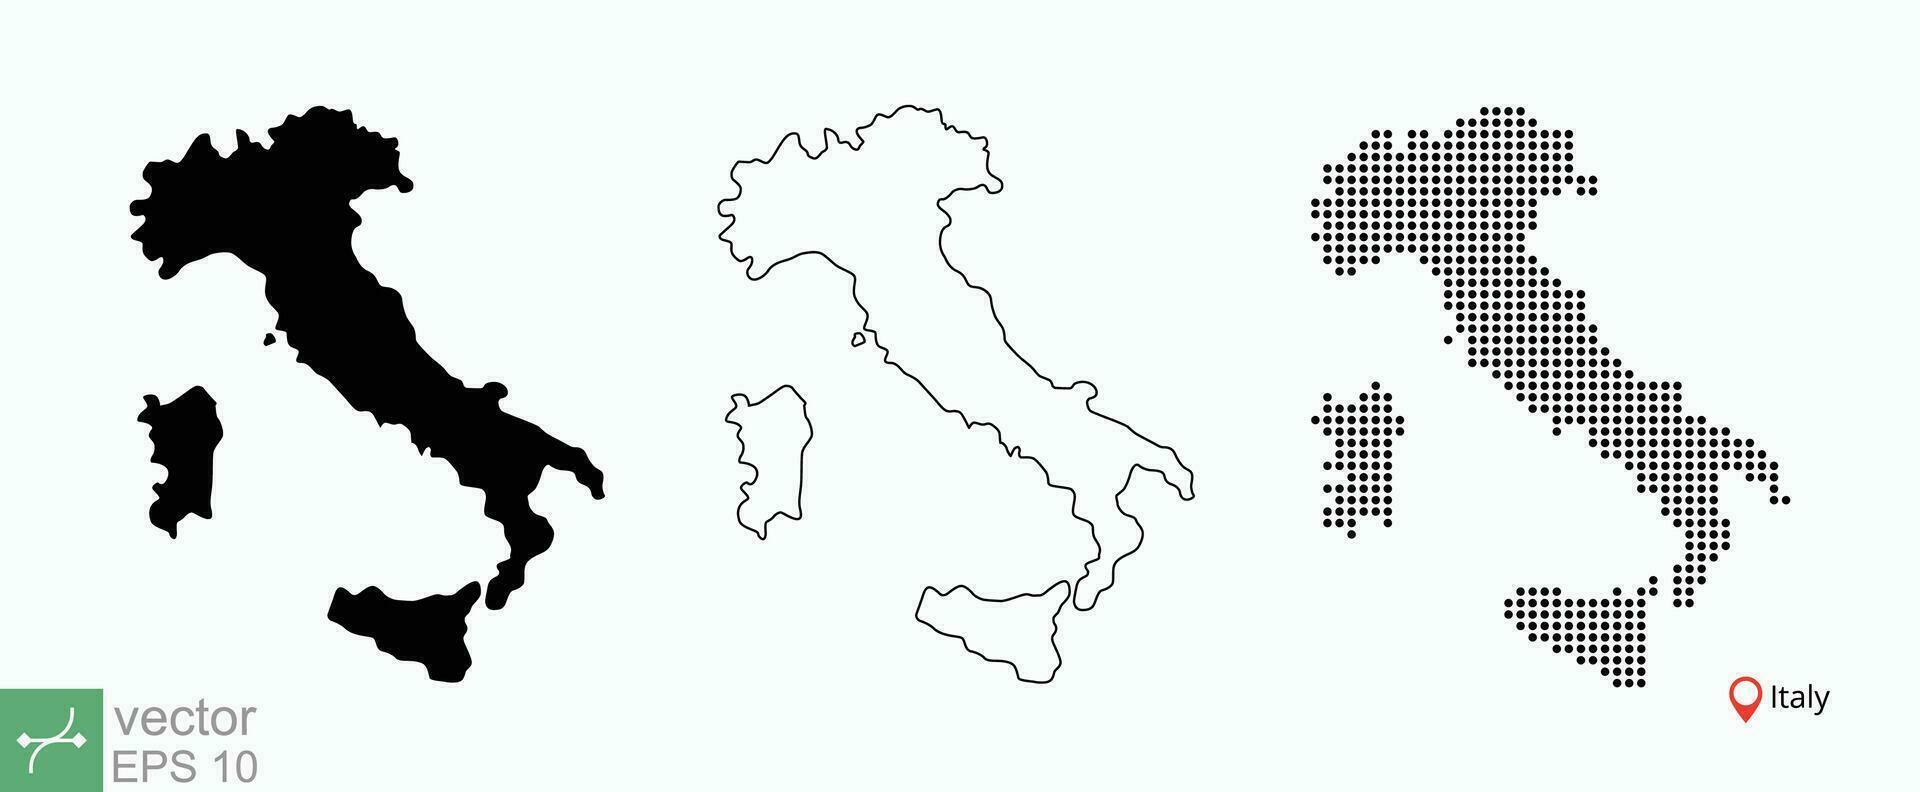 Italia mapa. italia, región, Europa, estado, país, geografía concepto. silueta, describir, plan, punto mapa. sencillo plano estilo. vector ilustración aislado en blanco antecedentes. eps 10